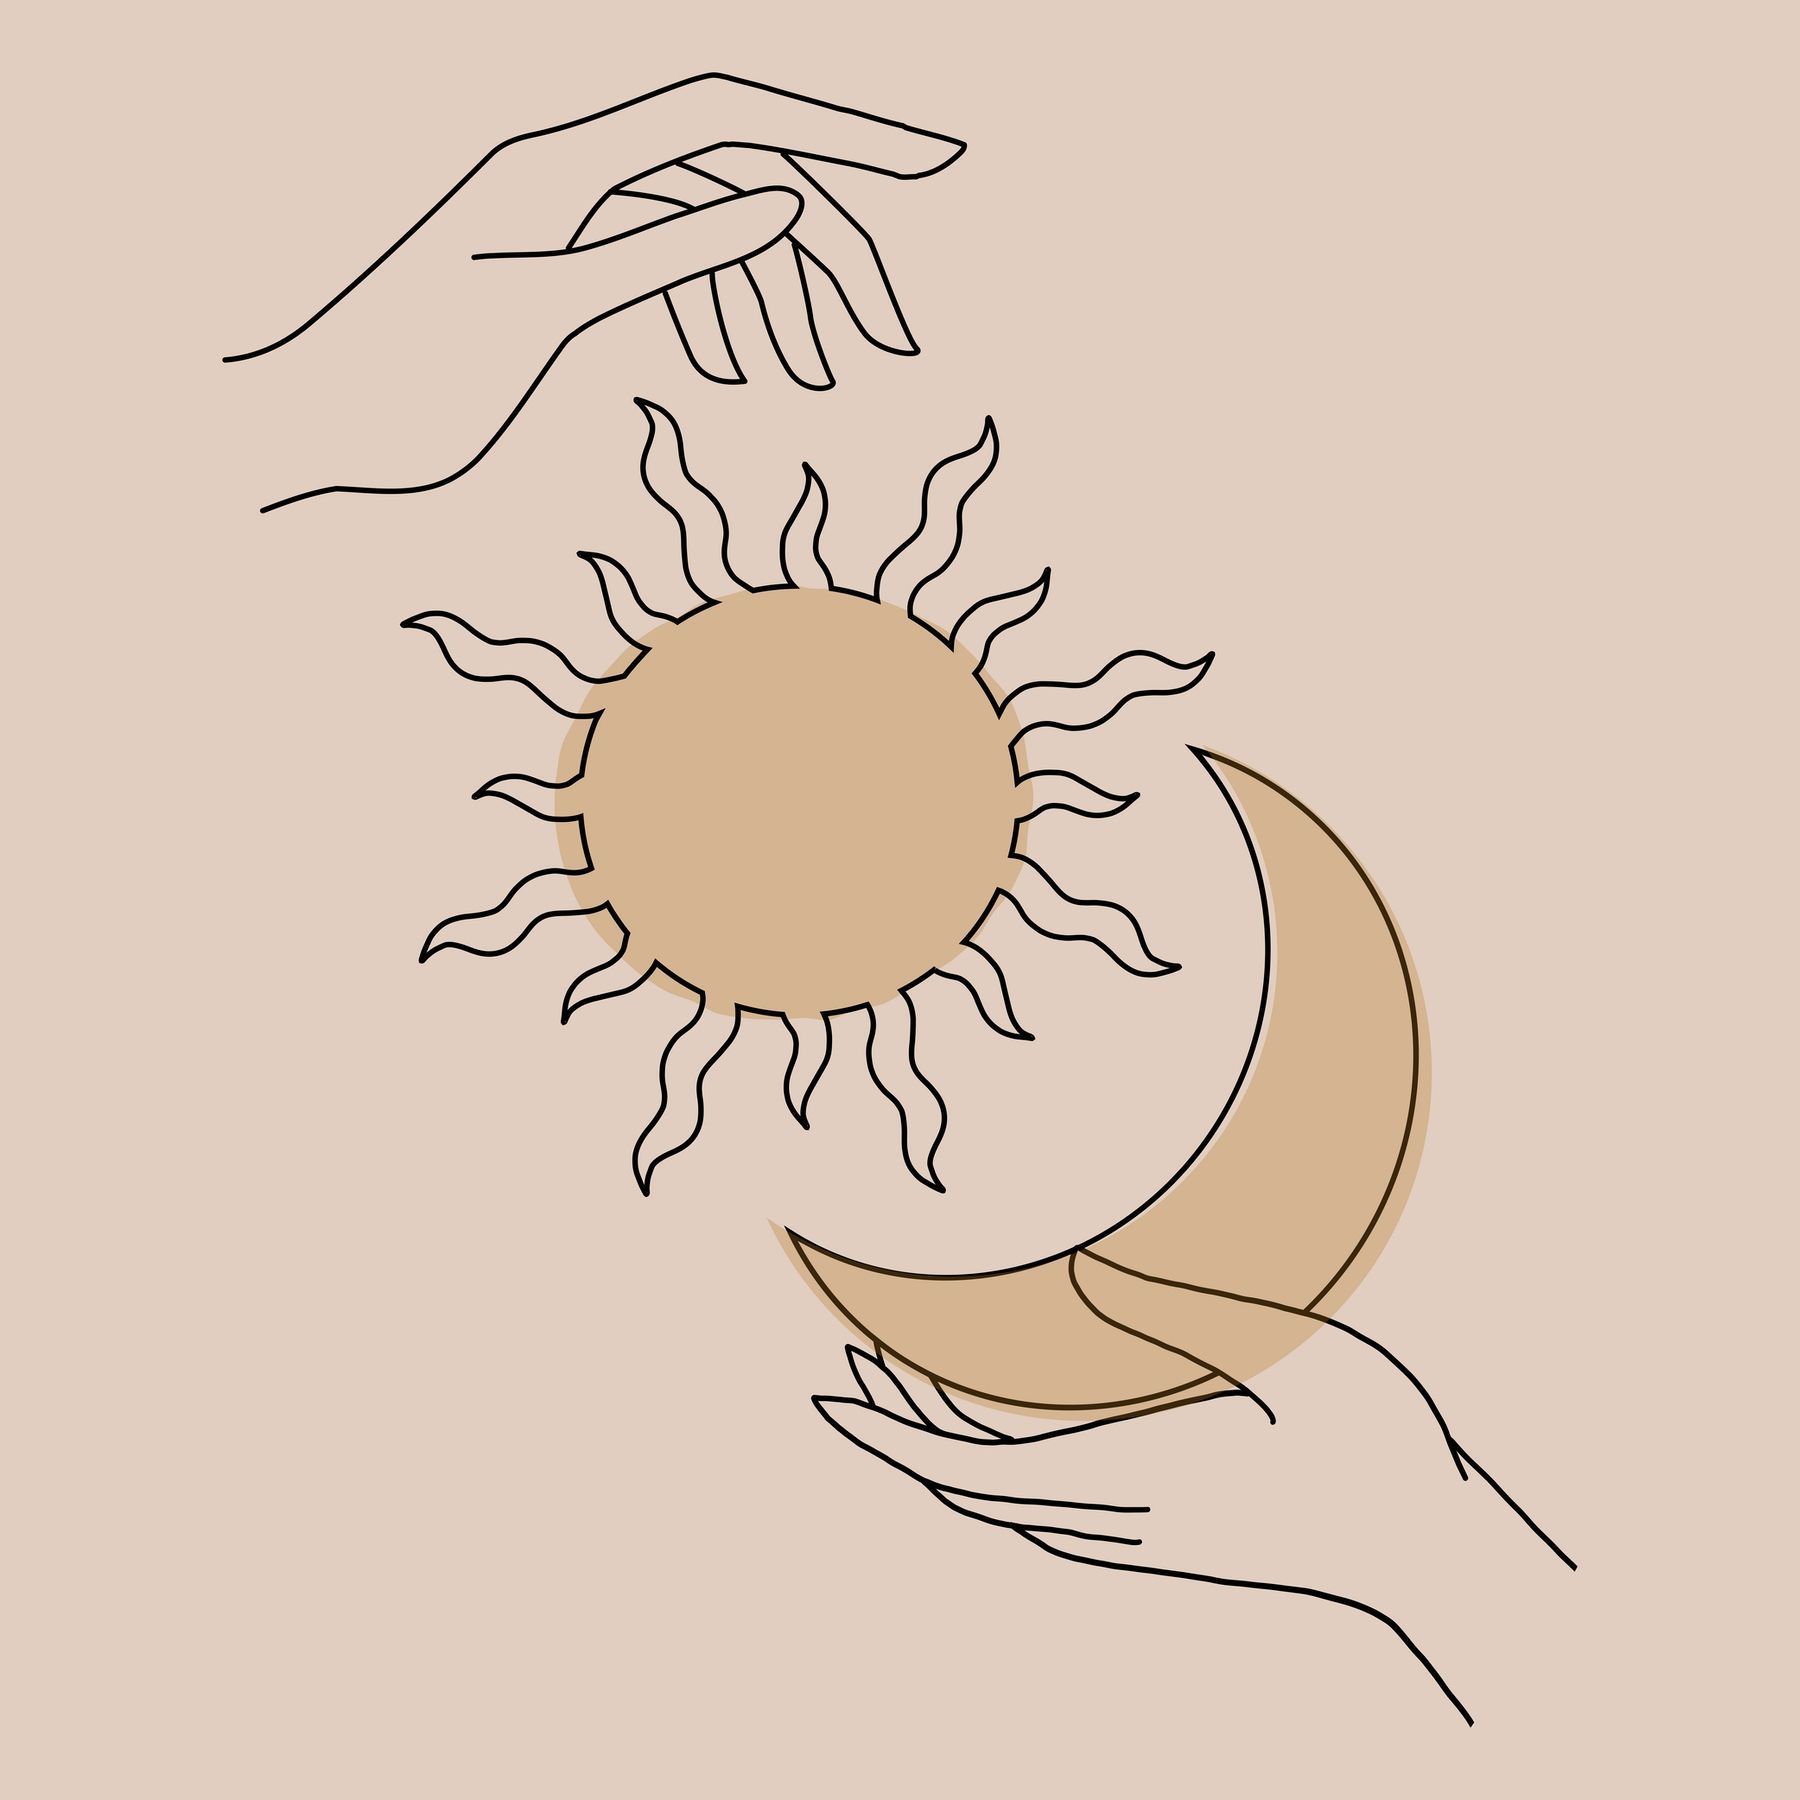 Hands holding the sun and moon - Sun, sunlight